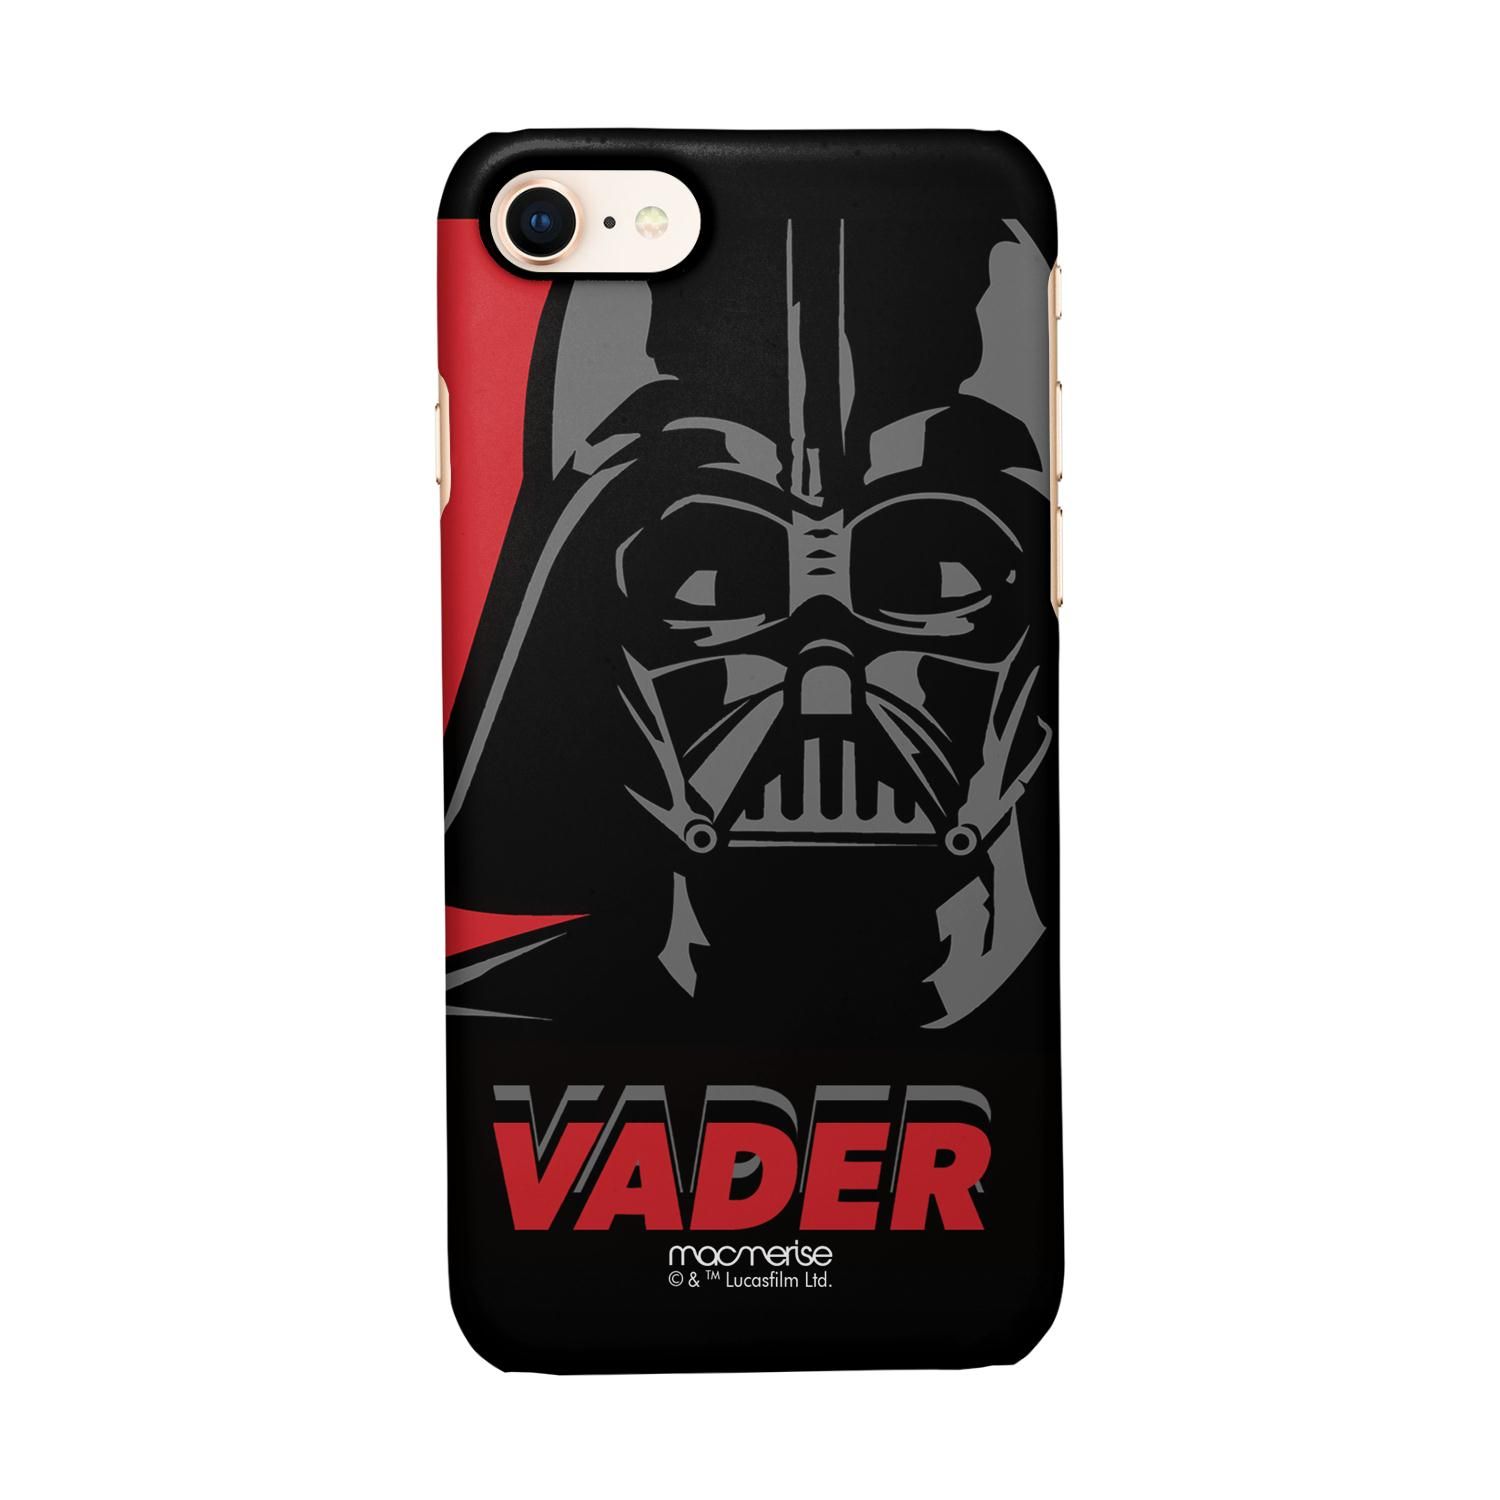 Buy Vader - Sleek Phone Case for iPhone 8 Online